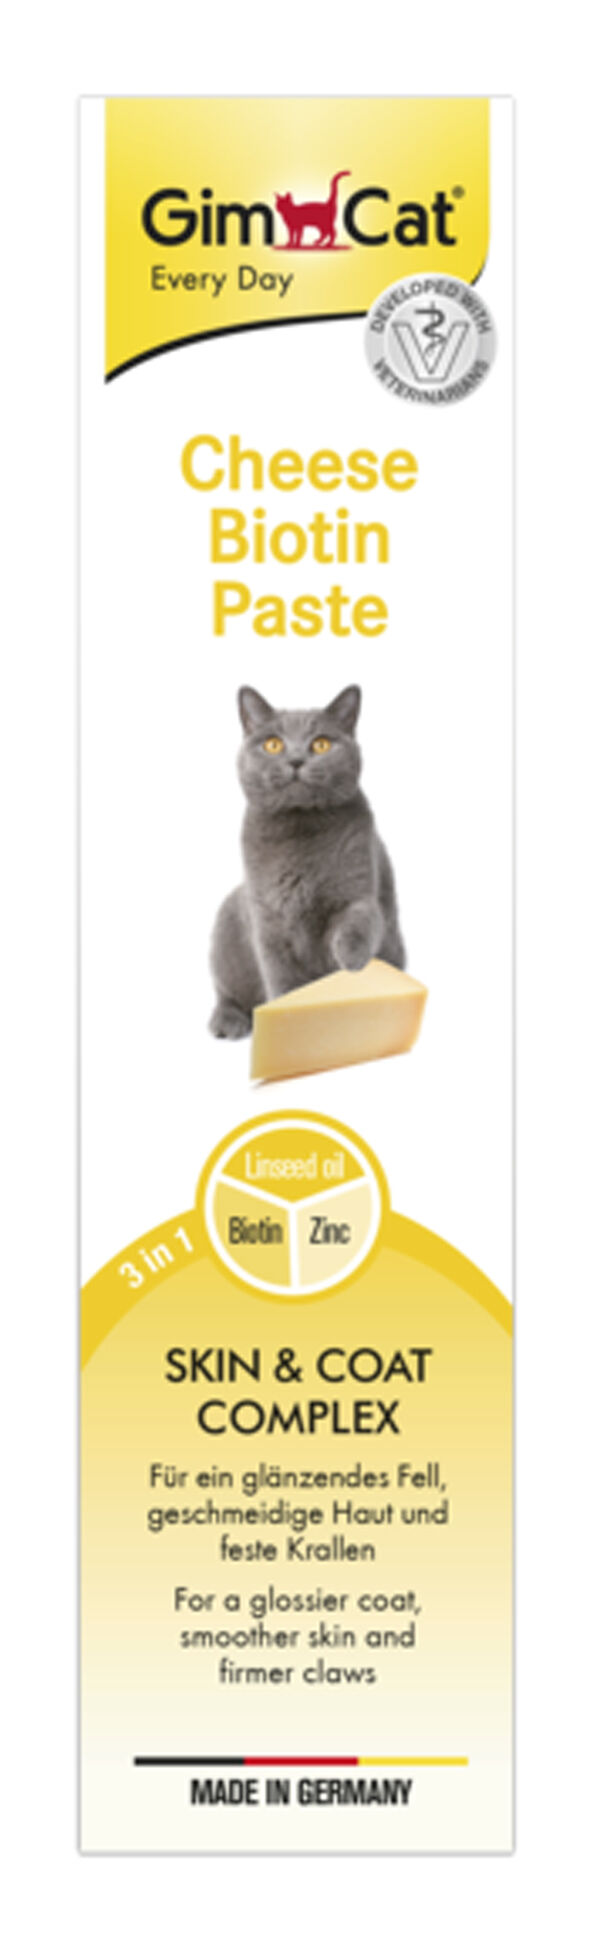 GimCat-Cheese-Biotin-Paste-kaese-katzen-leckerli-200g-34-401010